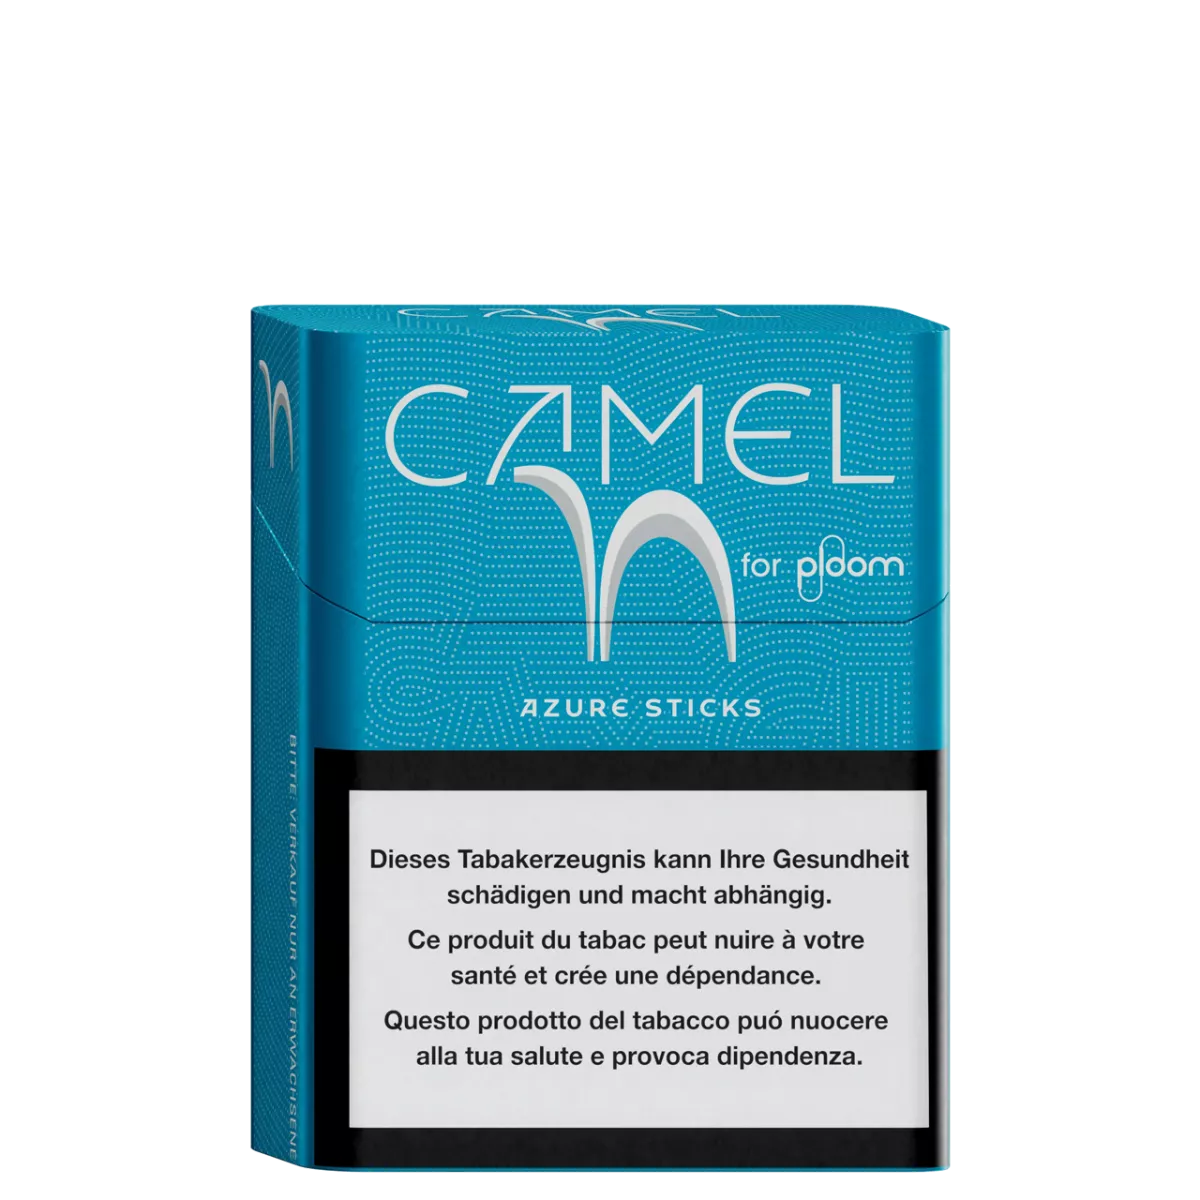 Camel Azure sticks für ploom linker Winkel